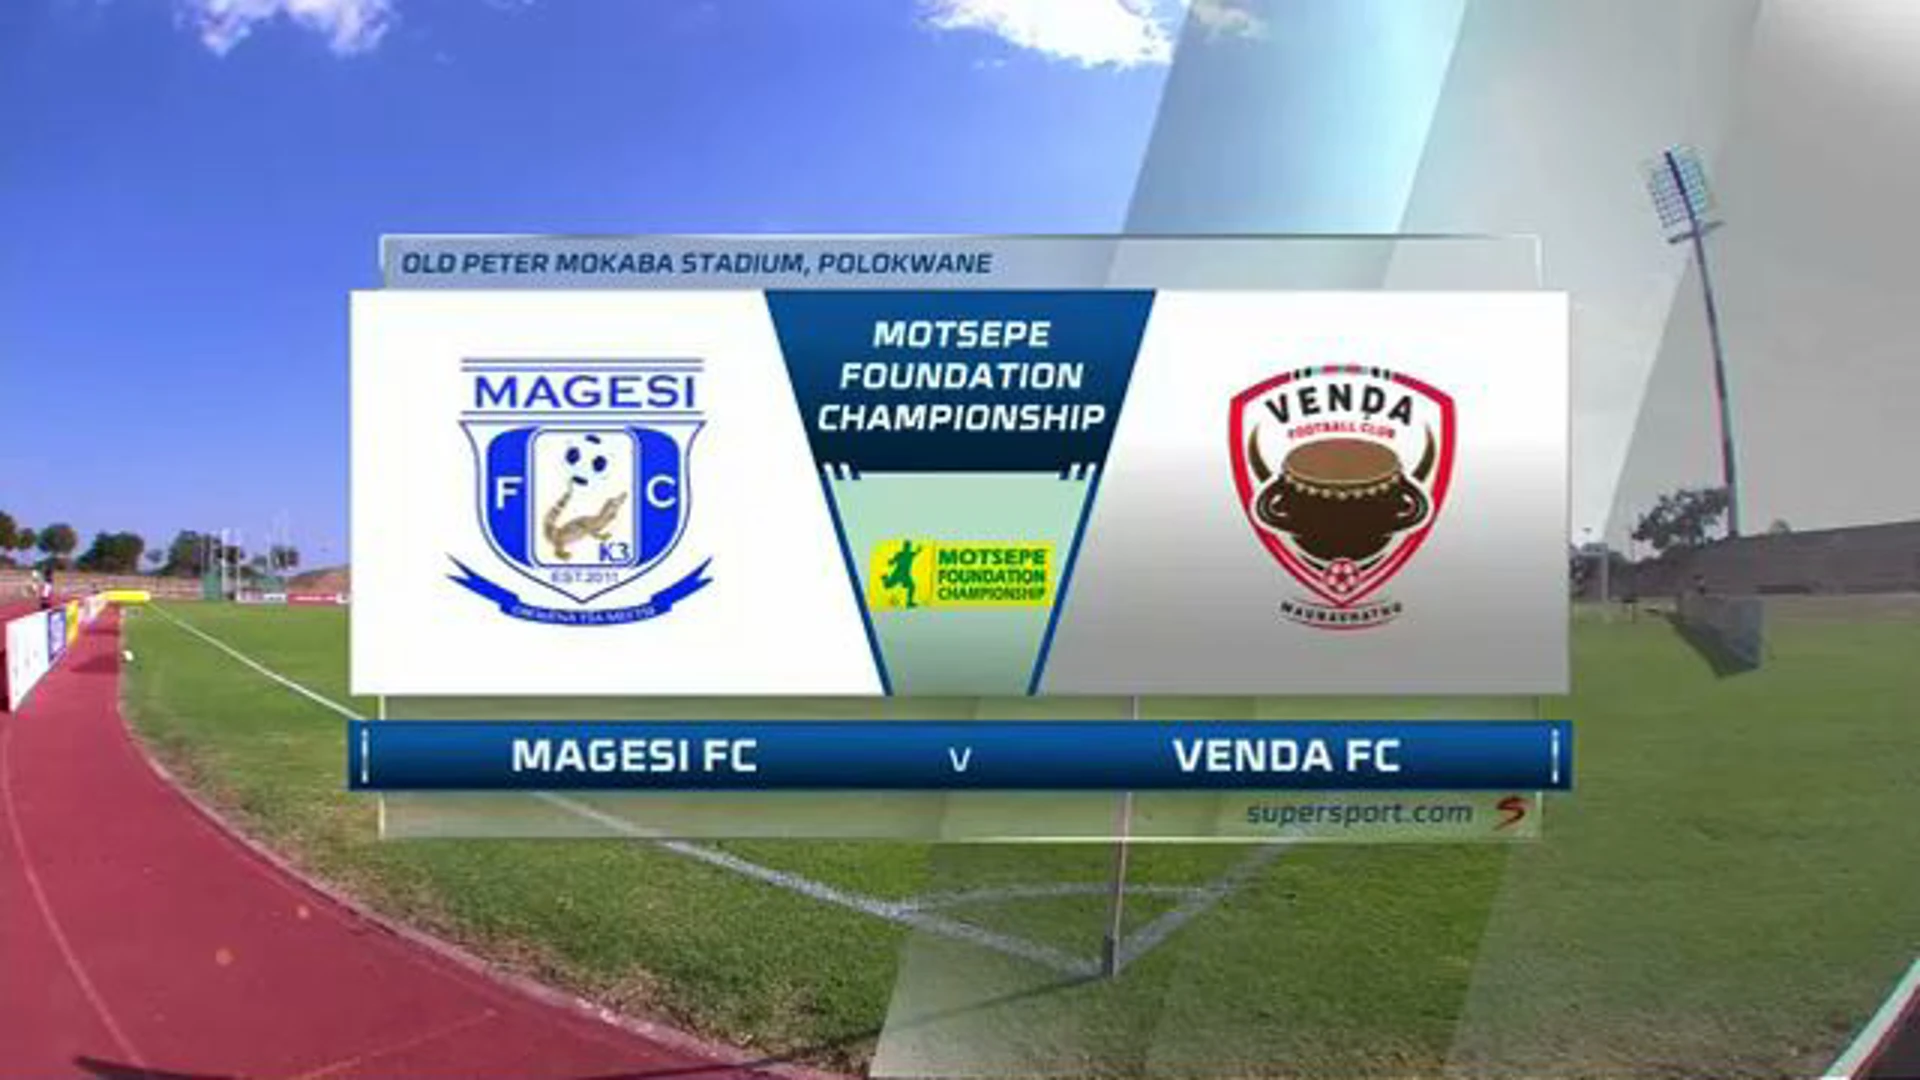 Magesi FC v Venda FC | Match highlights | Motsepe Foundation Championship